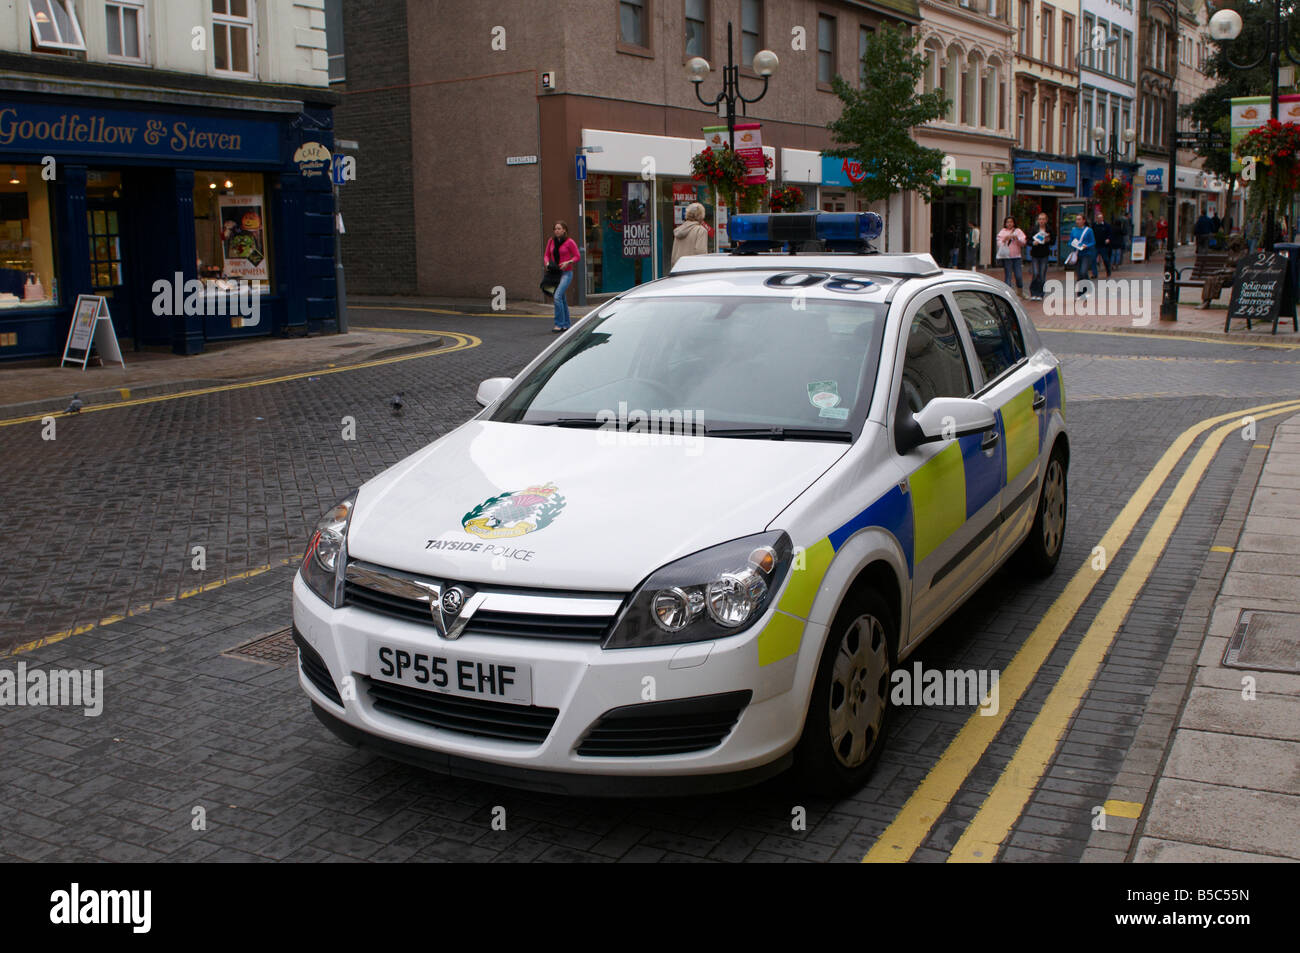 Police car Scotland UK Stock Photo